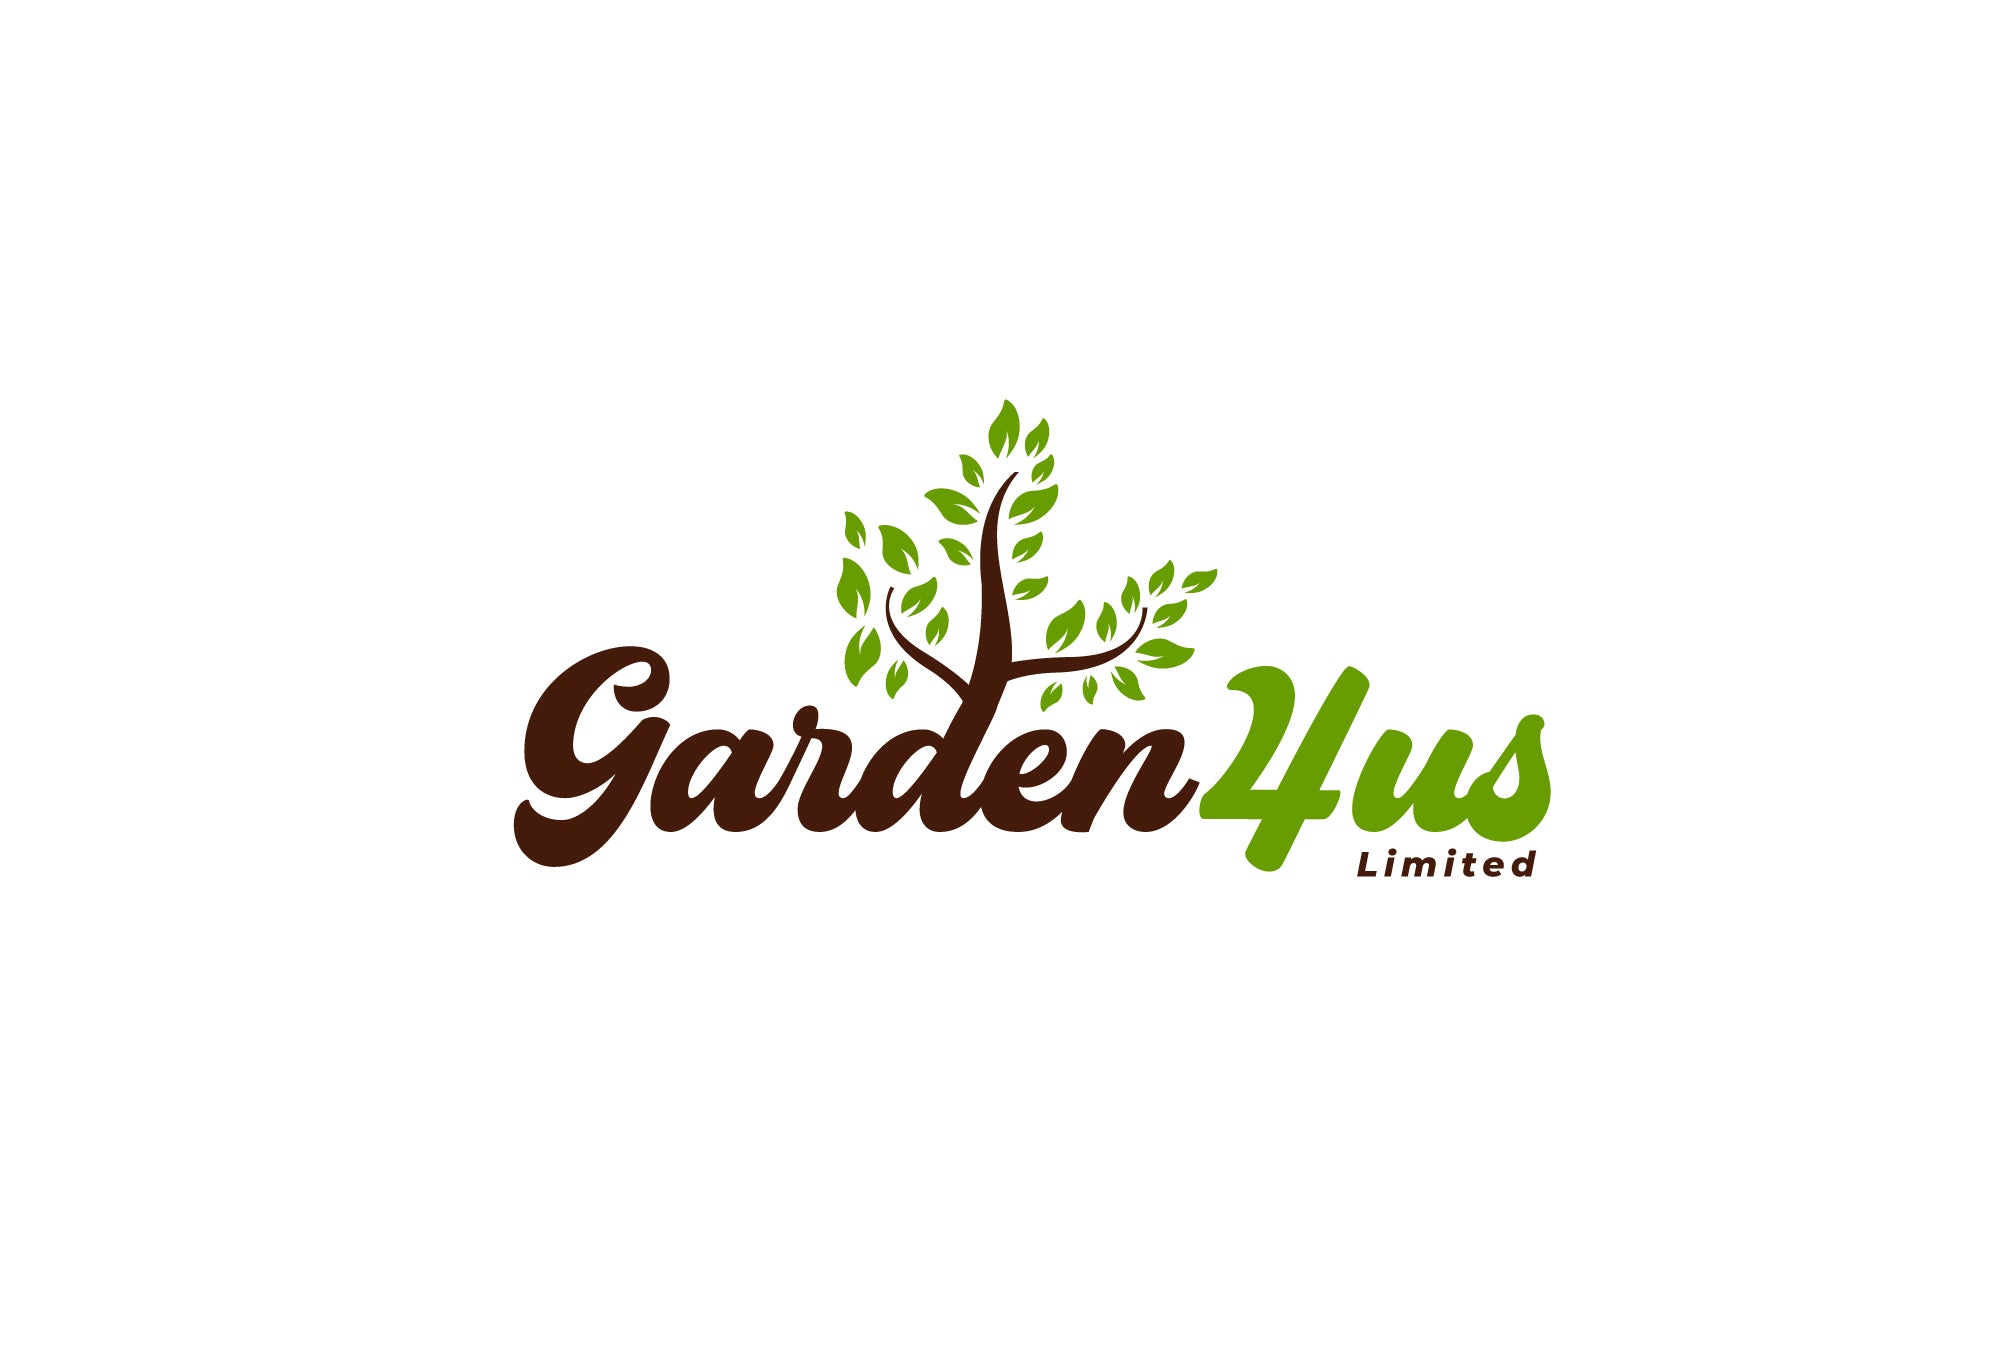 Garden4us Ltd